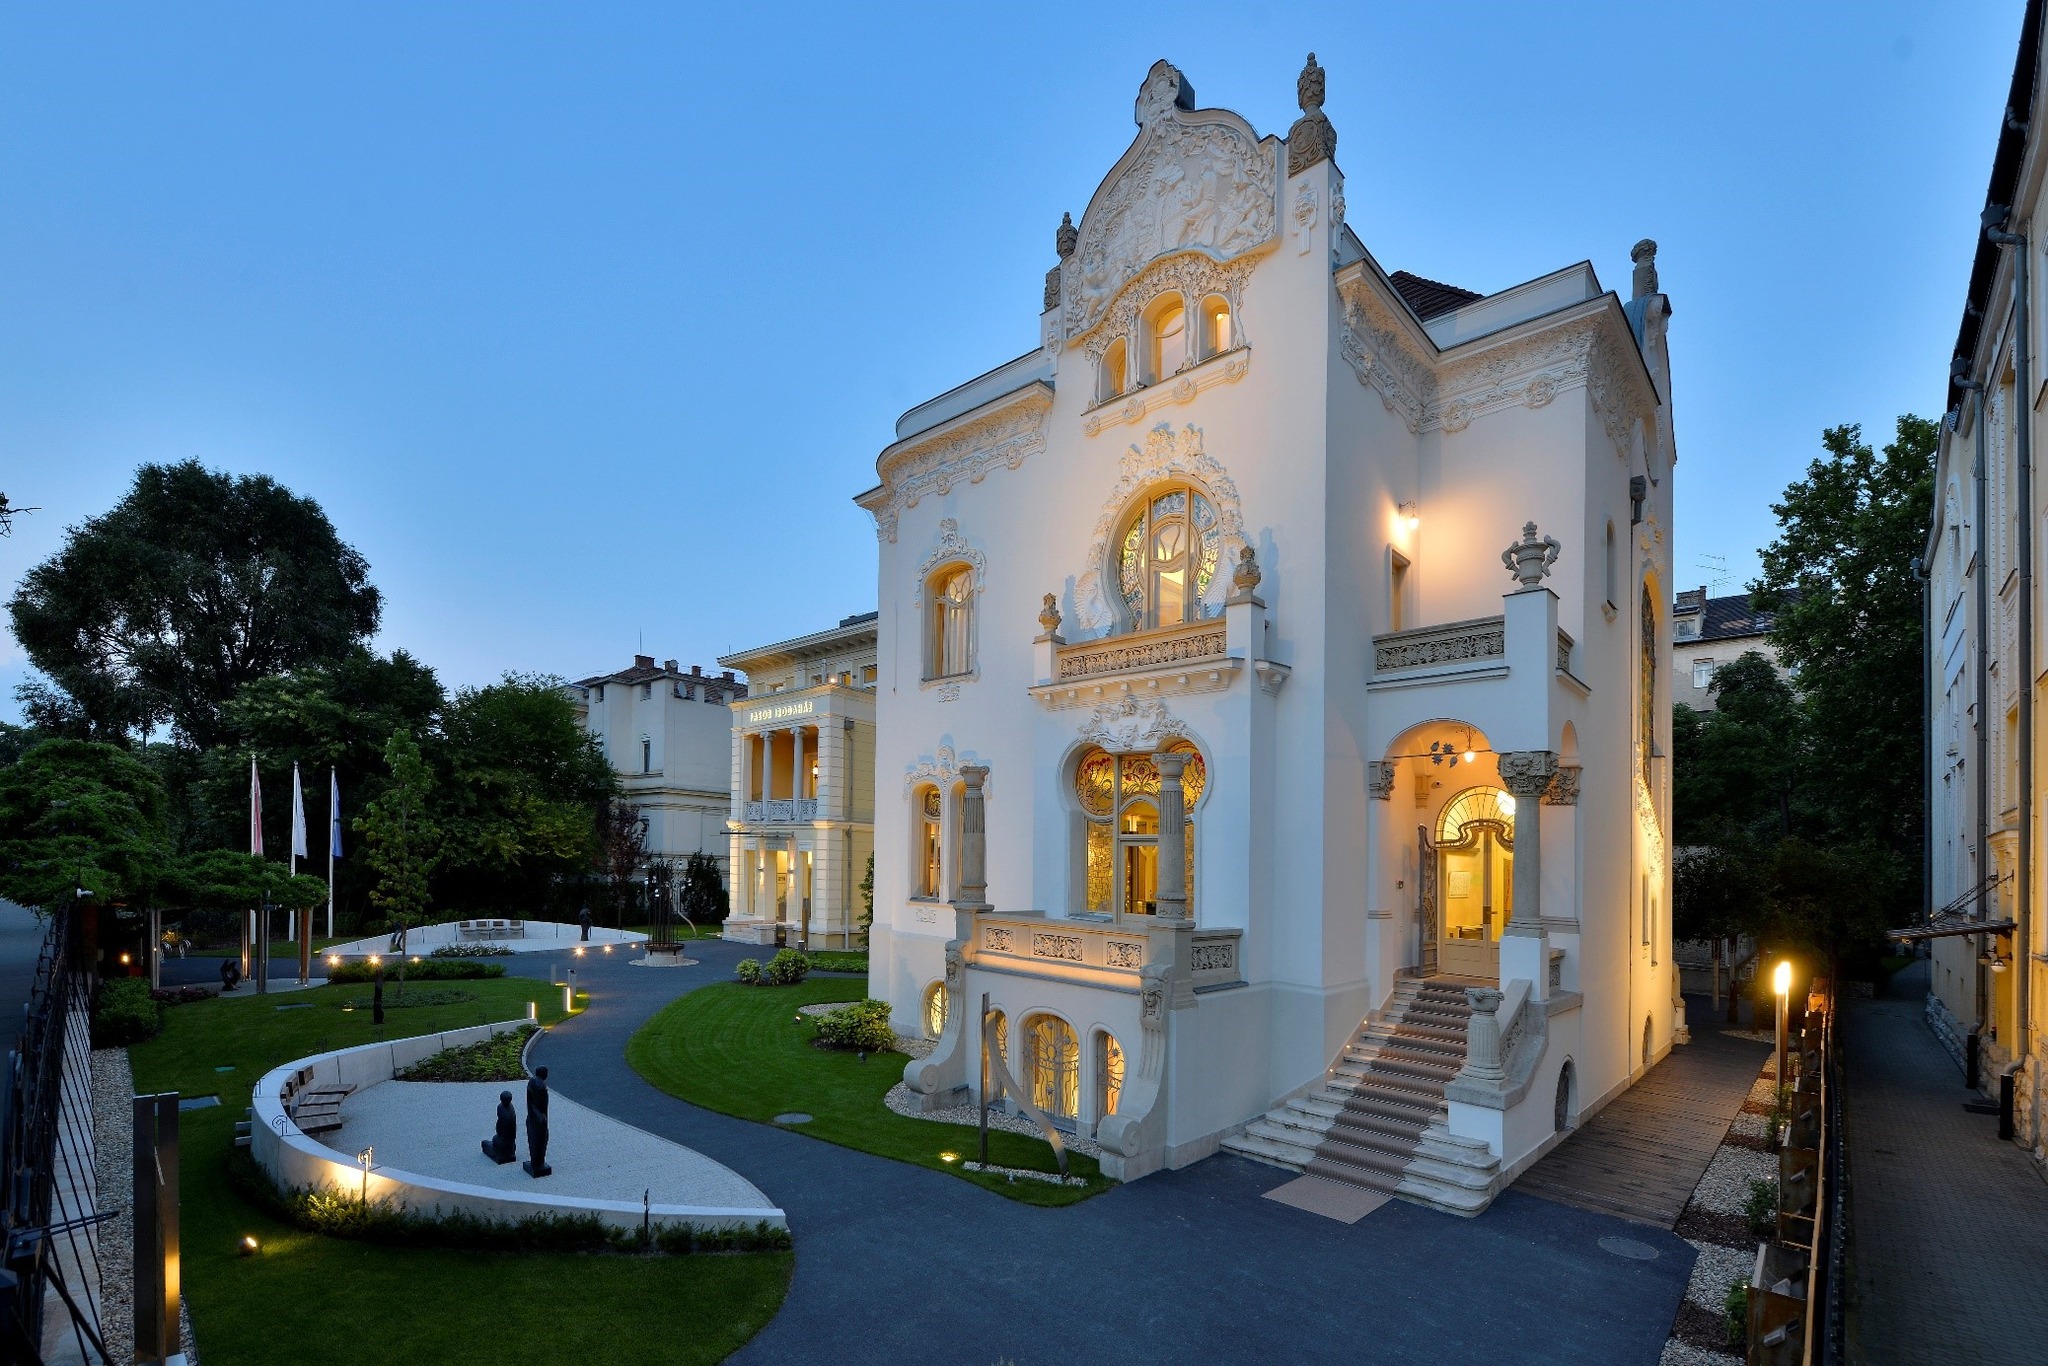 Zsolnay Porcelain Exhibition Opens in a Breathtaking Budapest Art Nouveau Villa